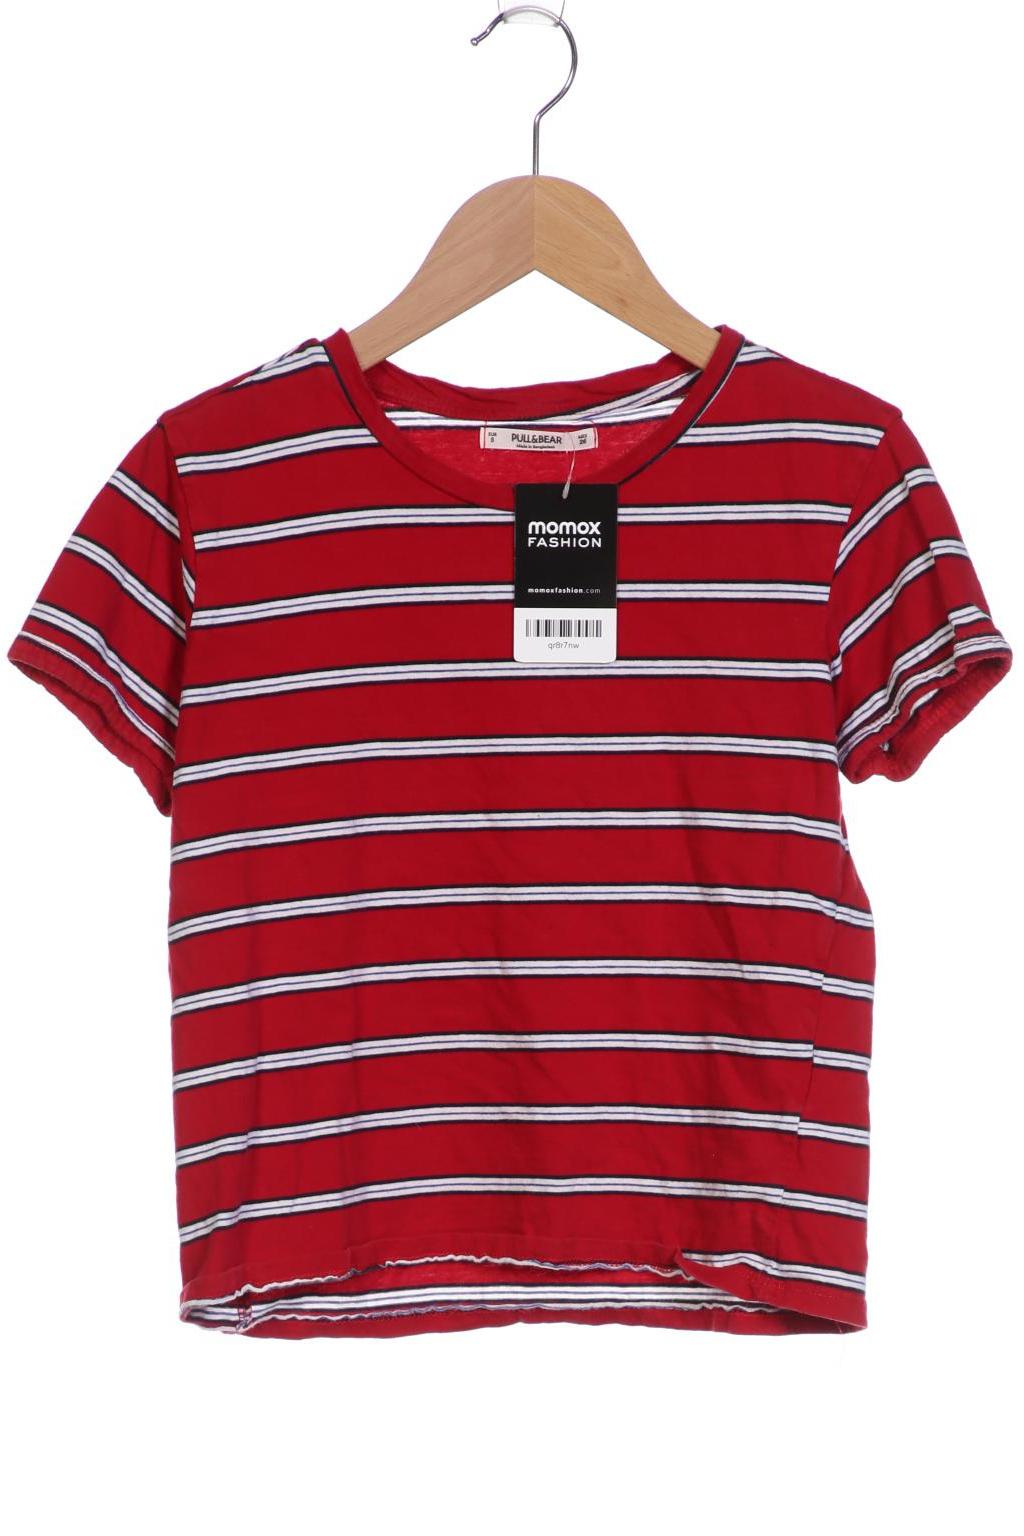 Pull & Bear Damen T-Shirt, rot von Pull & Bear